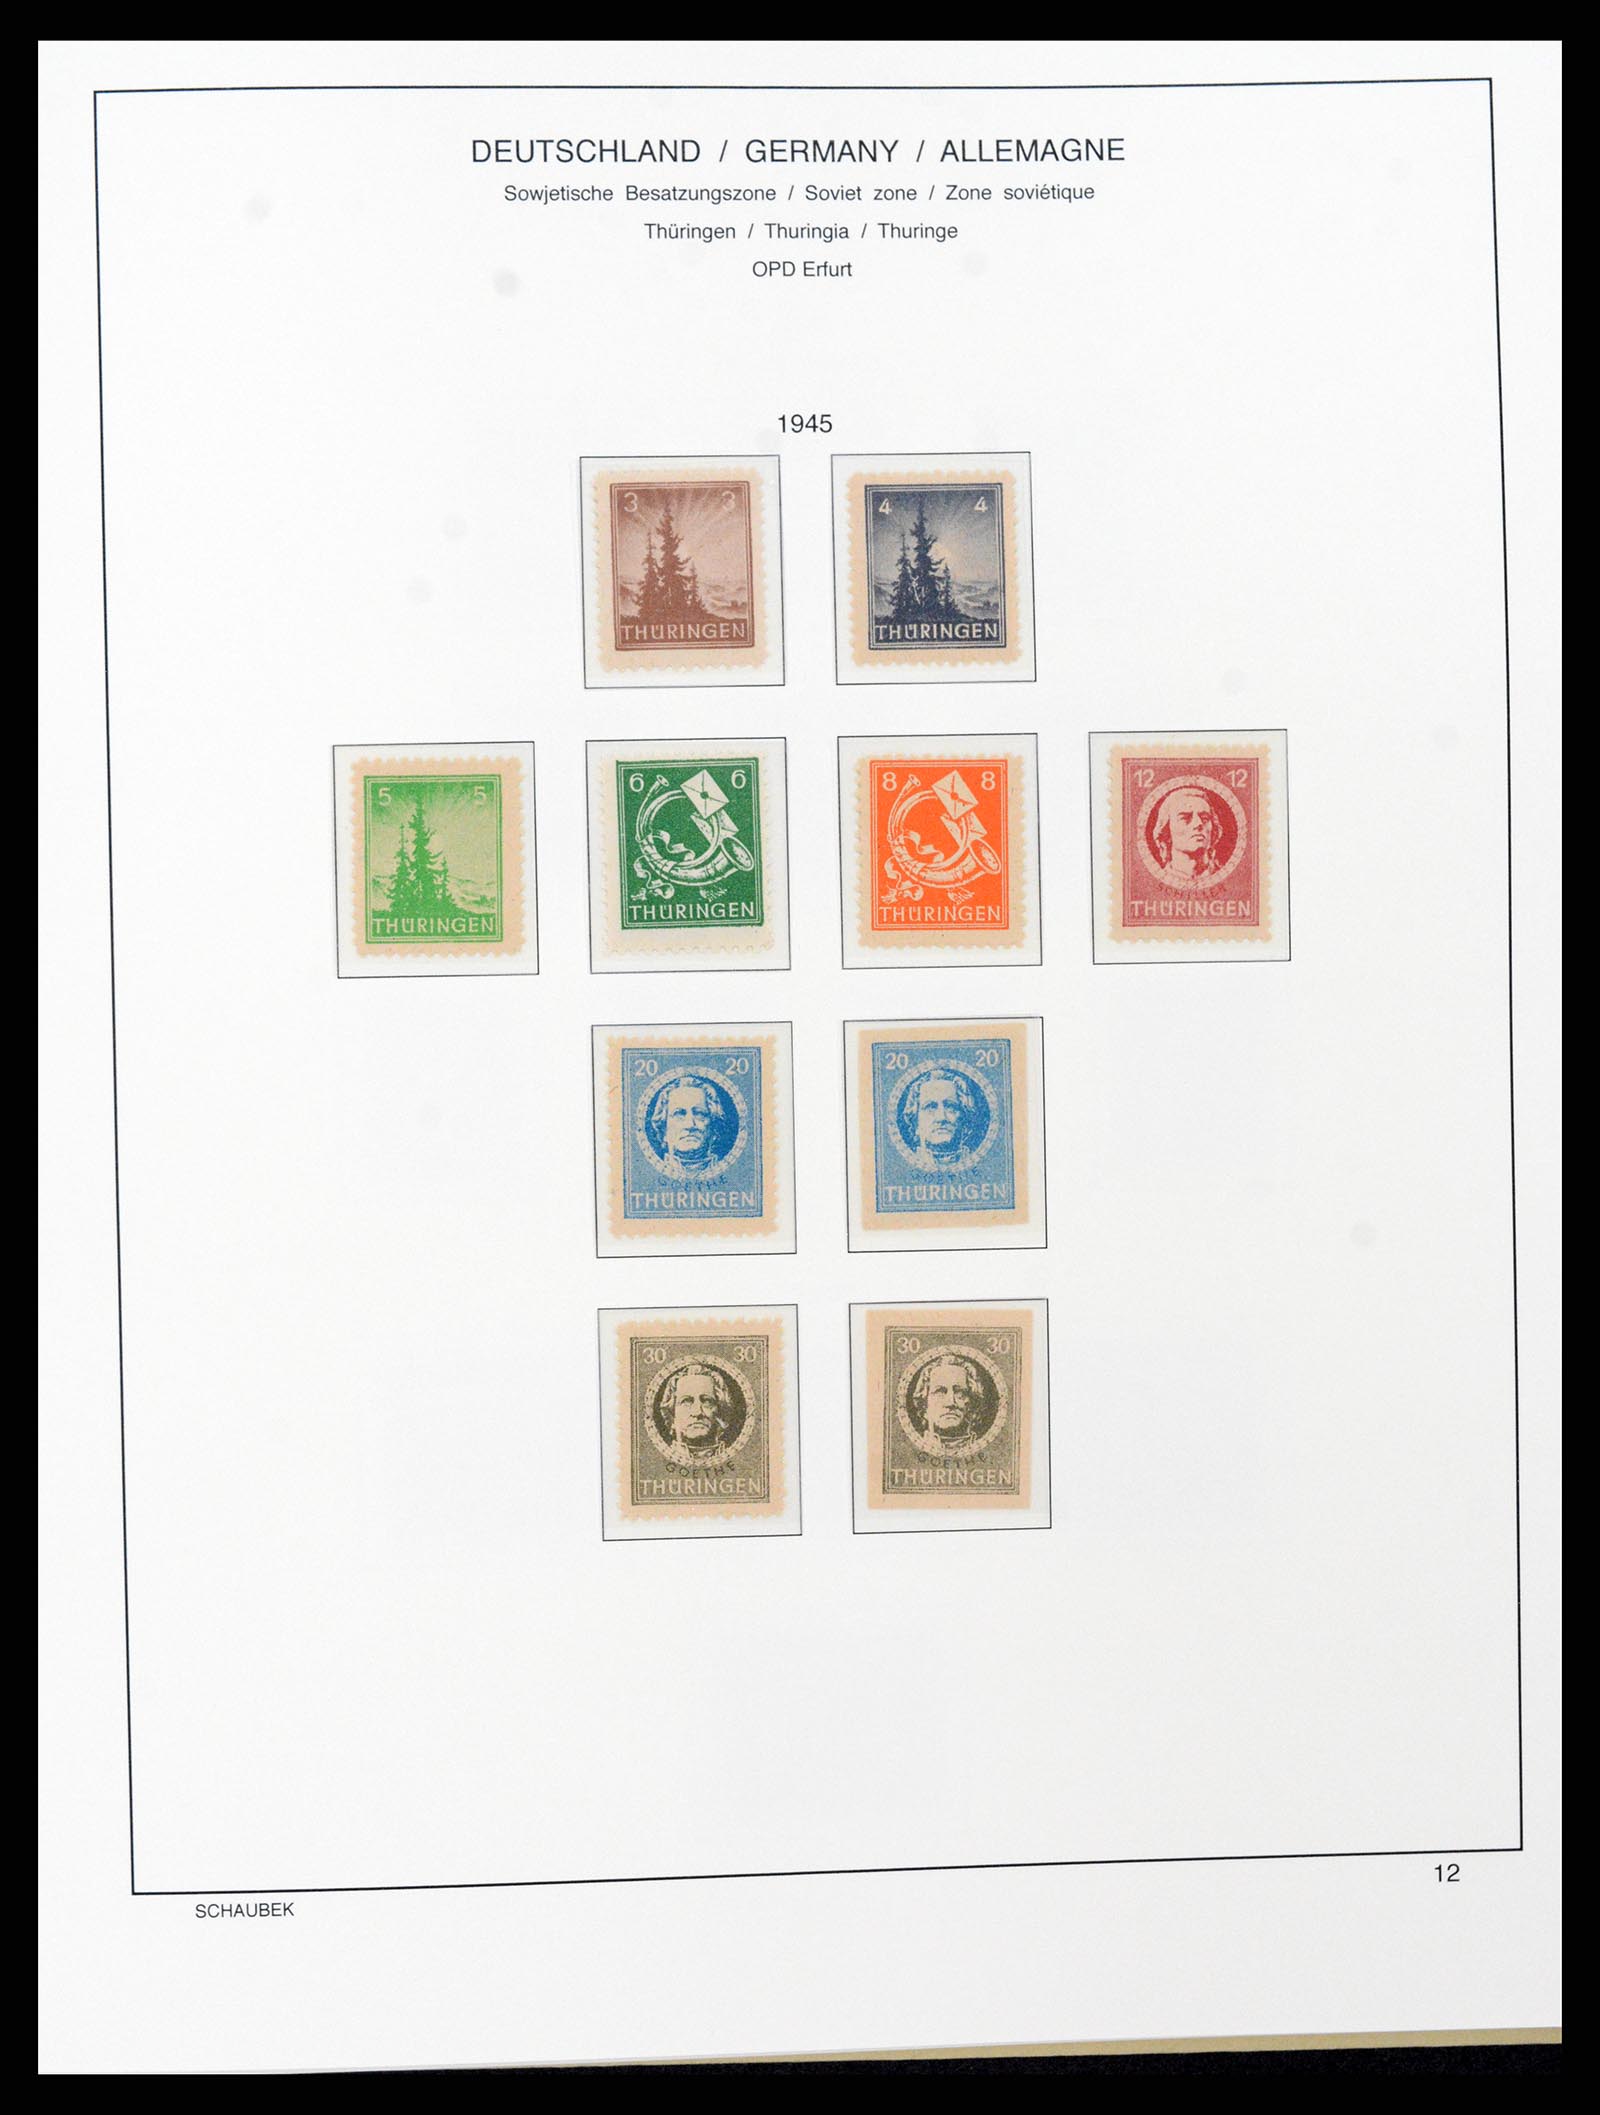 37645 030 - Stamp collection 37645 German Zones 1945-1949.